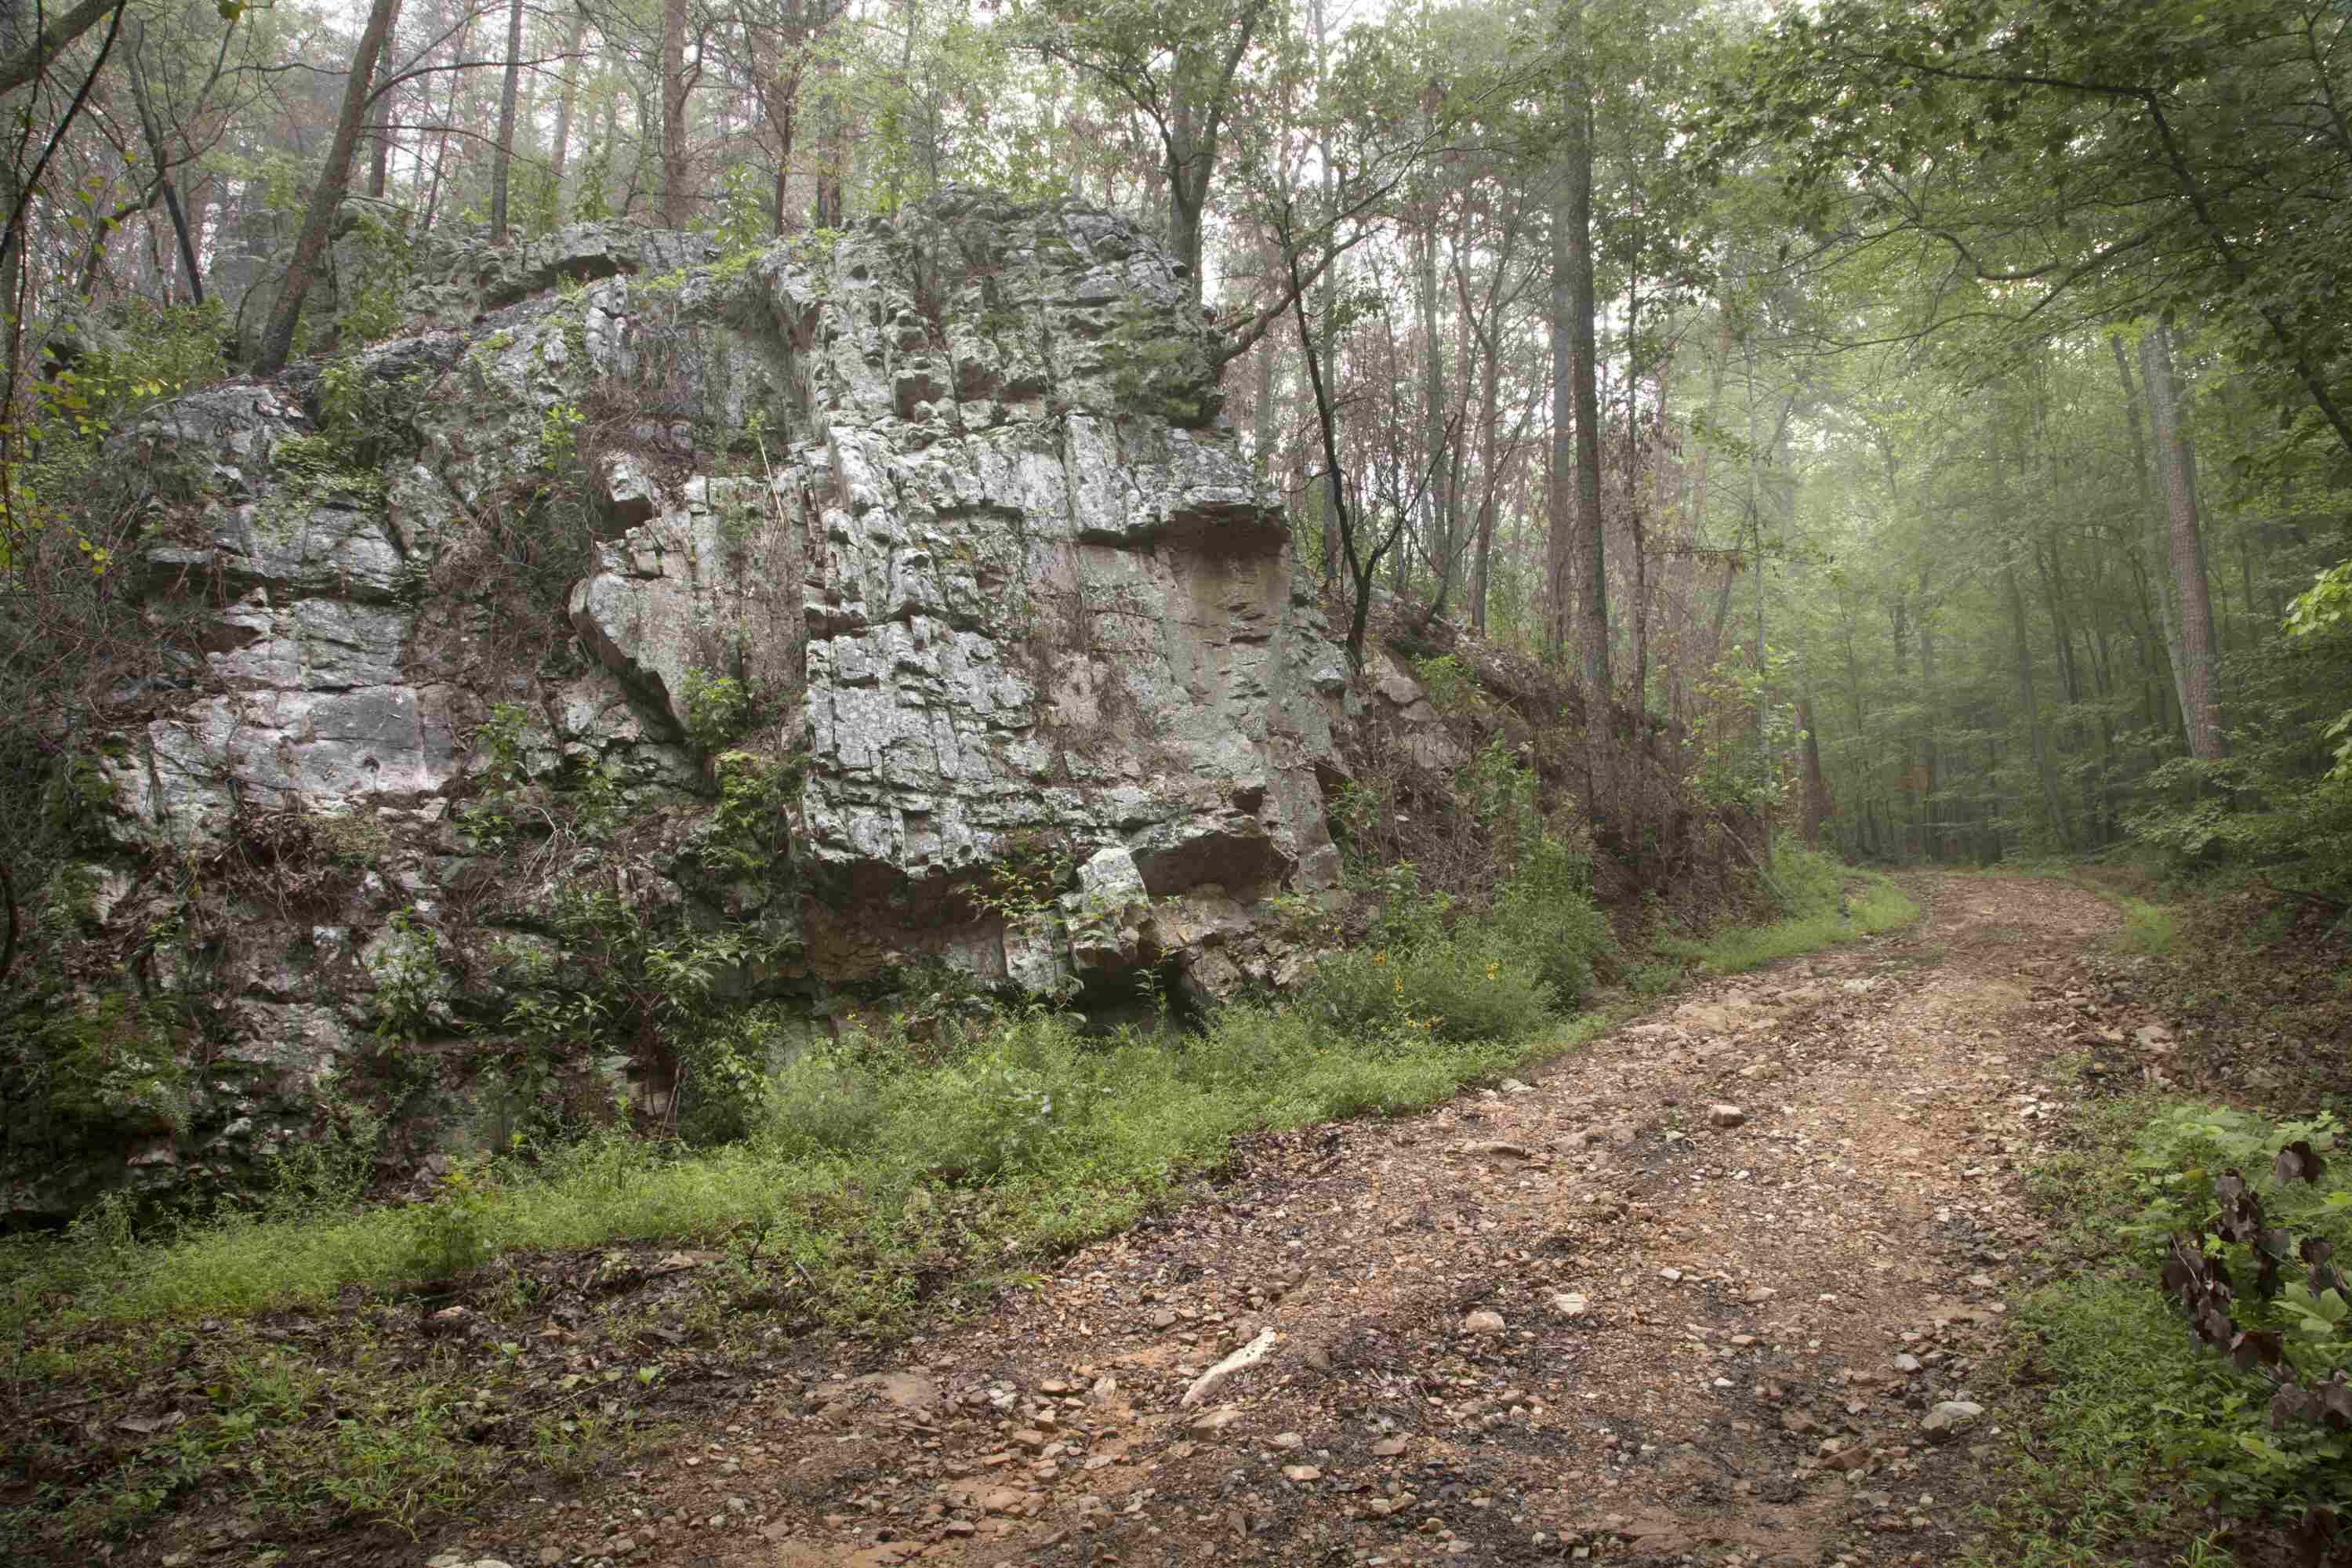 A rock outcrop along side the entrance road